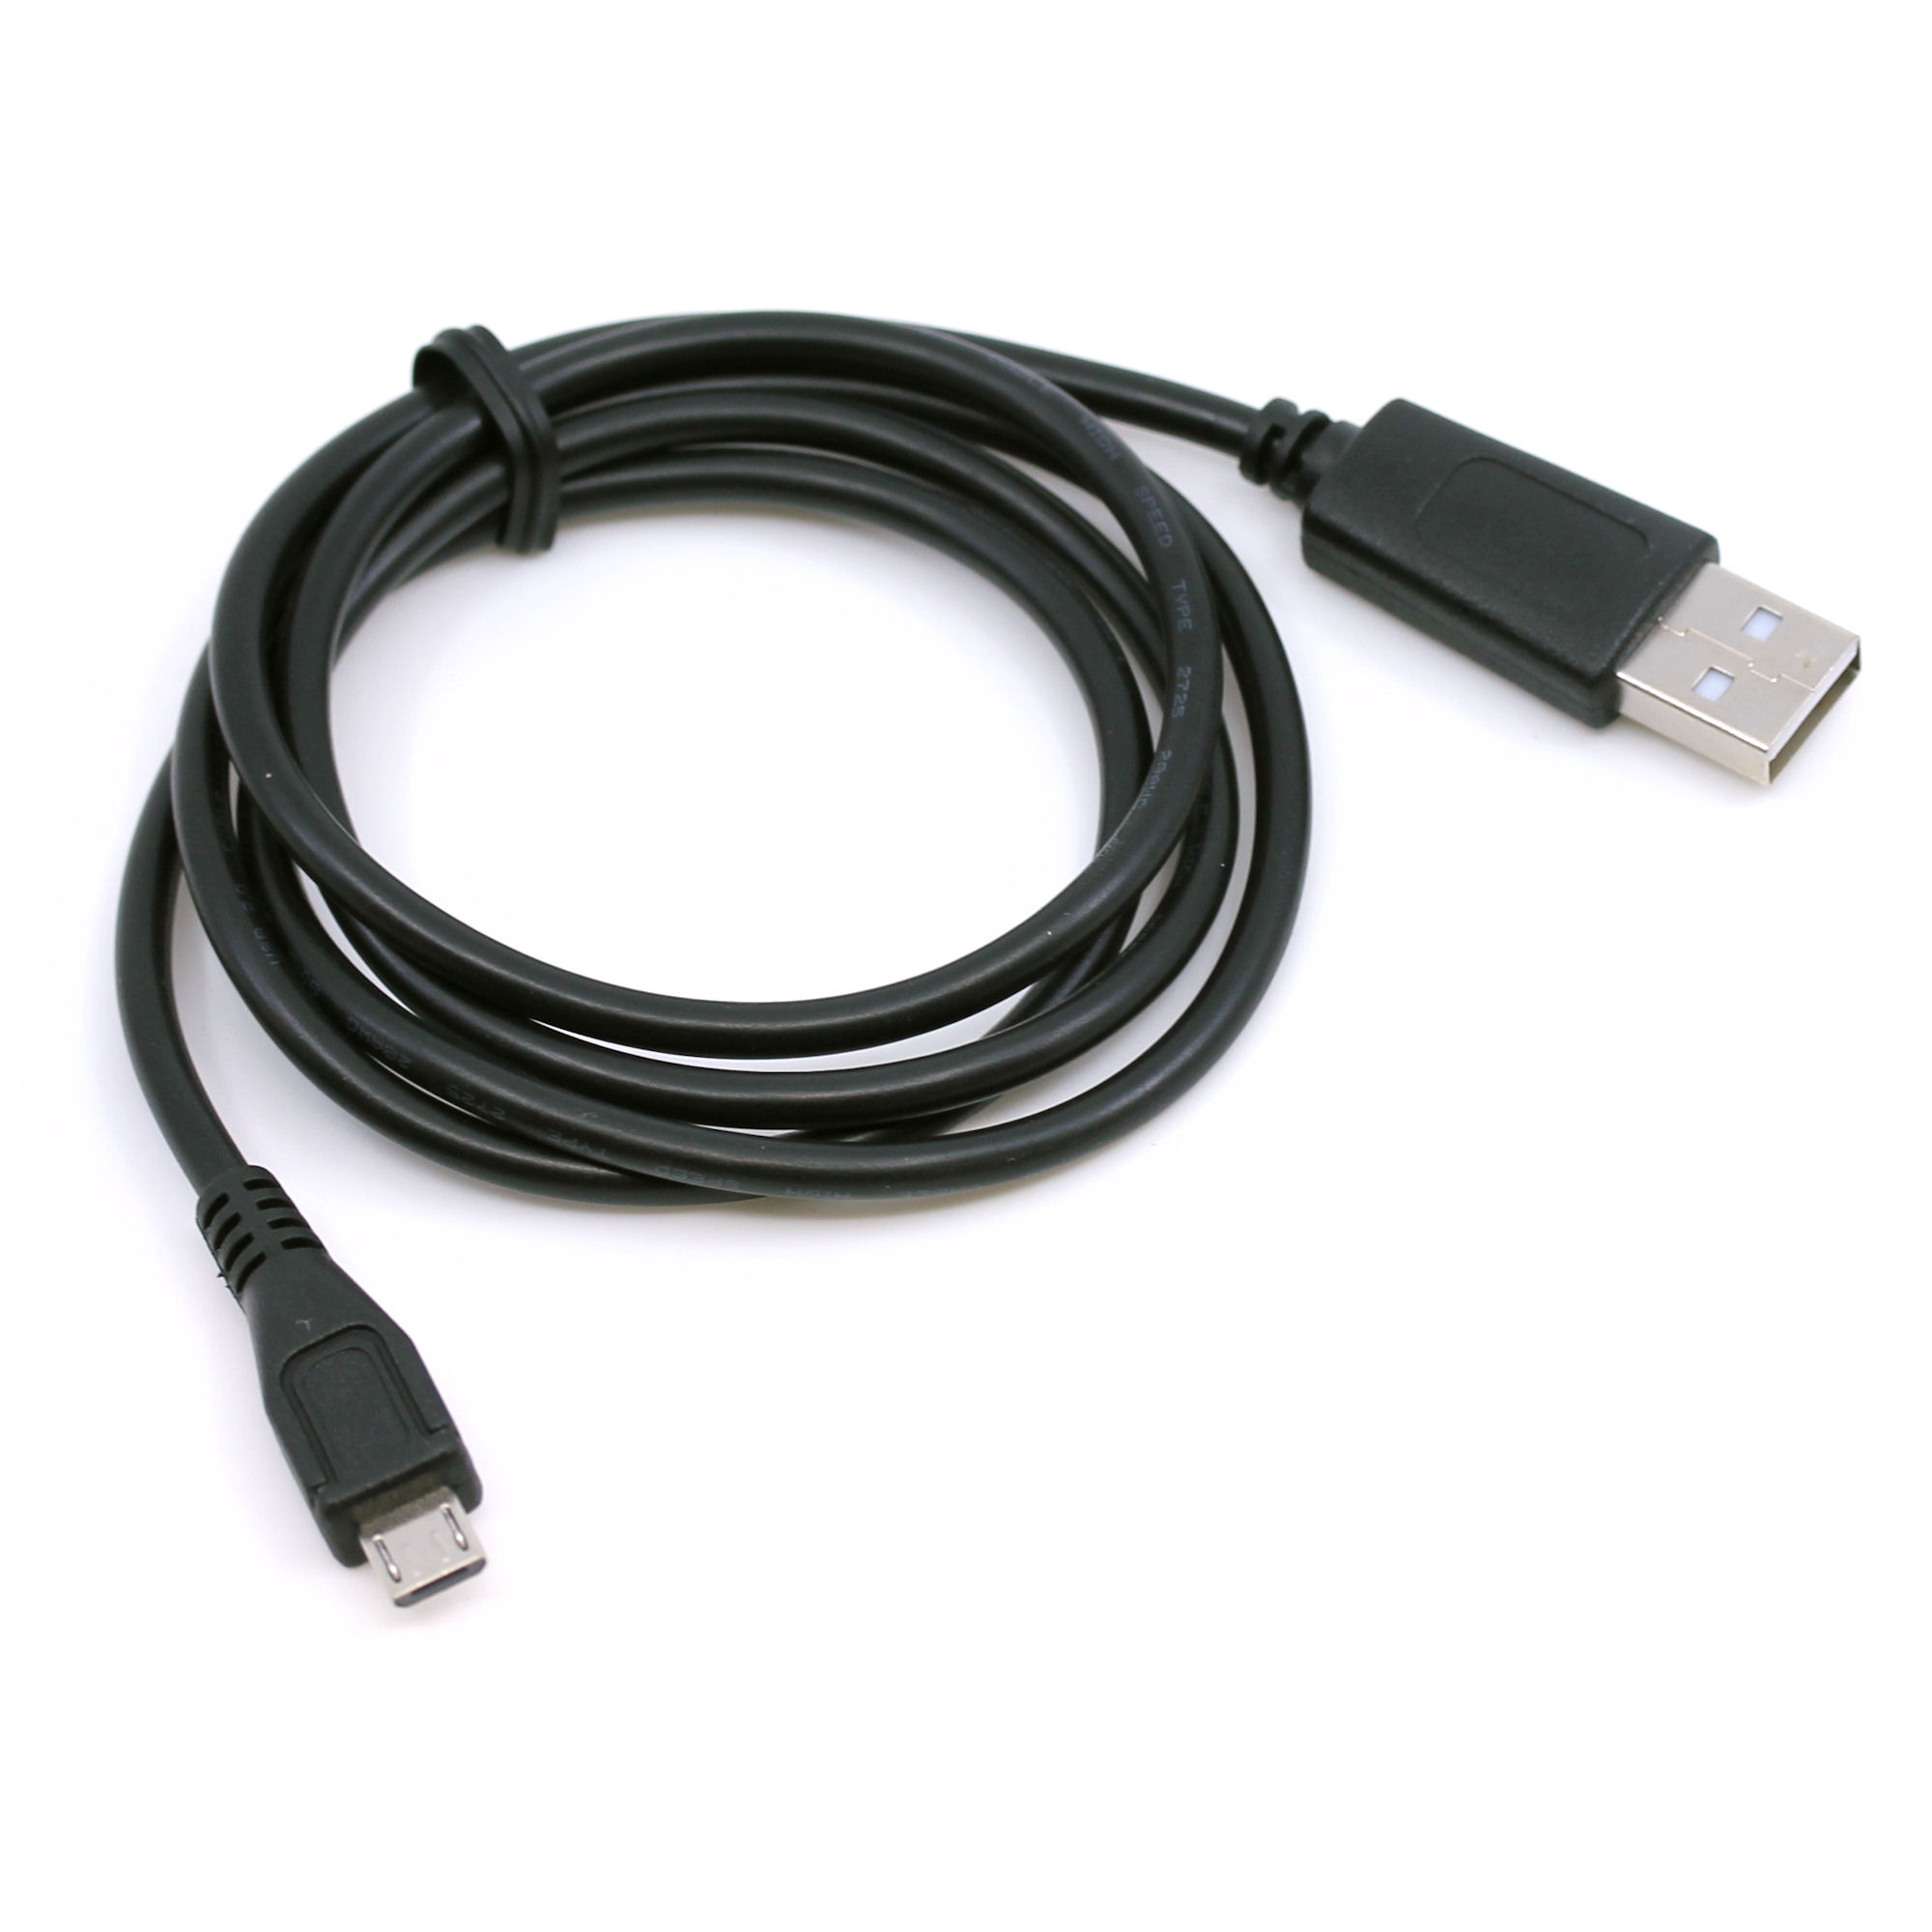 USB Datenkabel für Sony Alpha 3000, Alpha 5000, Alpha 5100, Alpha 6000, Alpha 6300, Alpha 6500